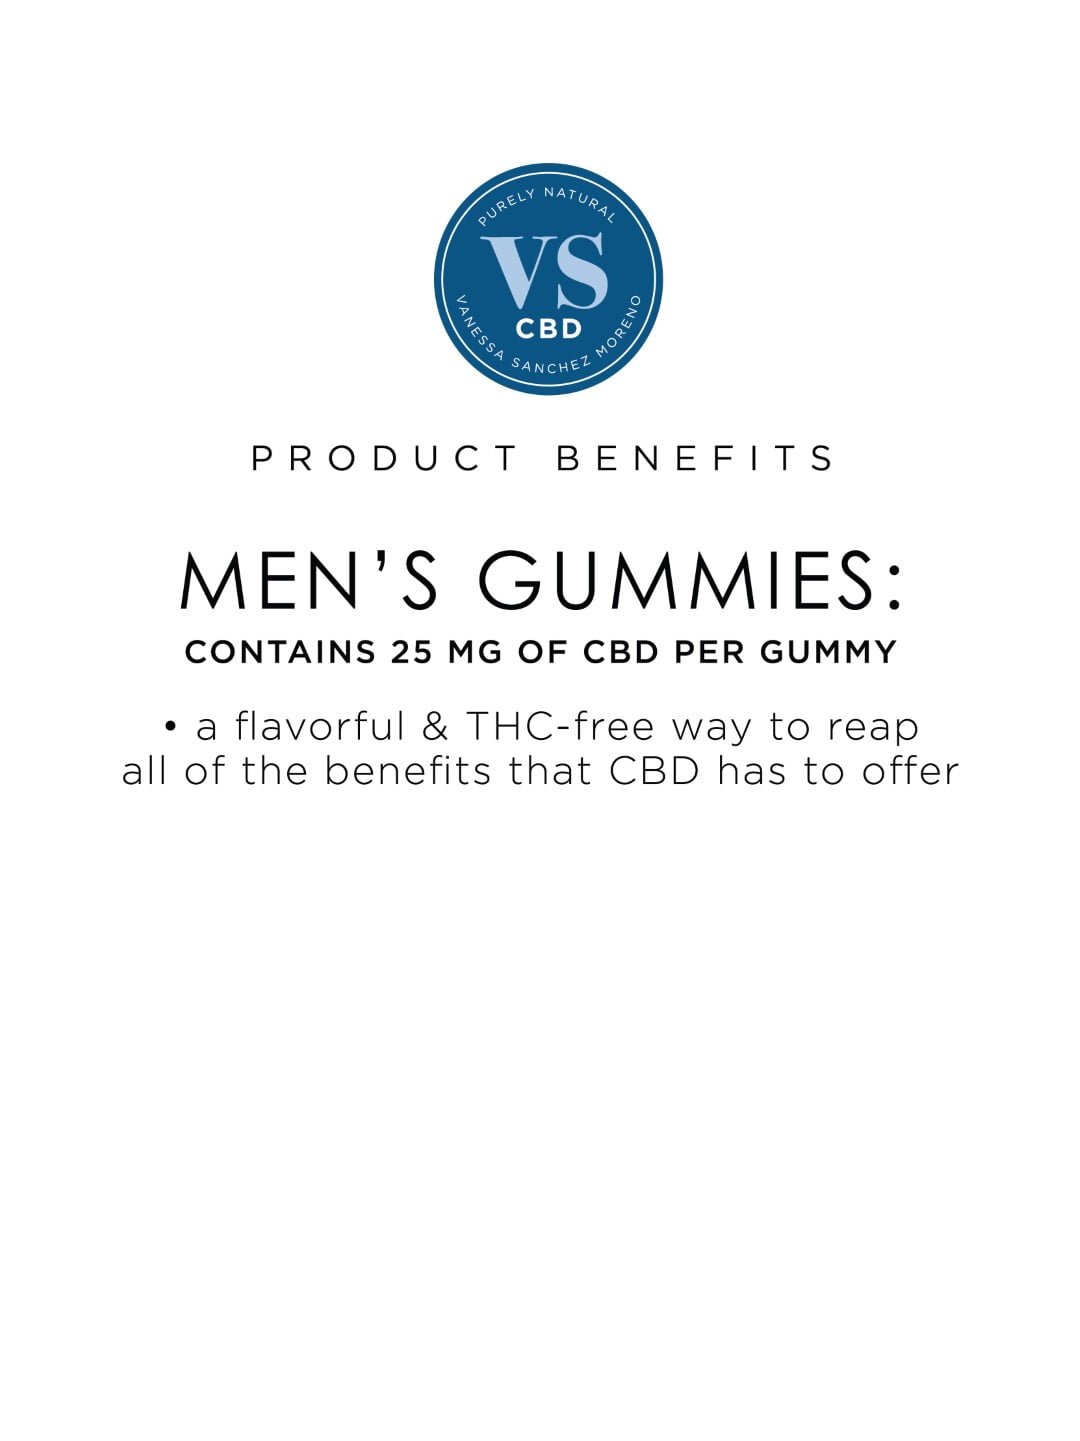 mens gummies benefits-01 (Large)